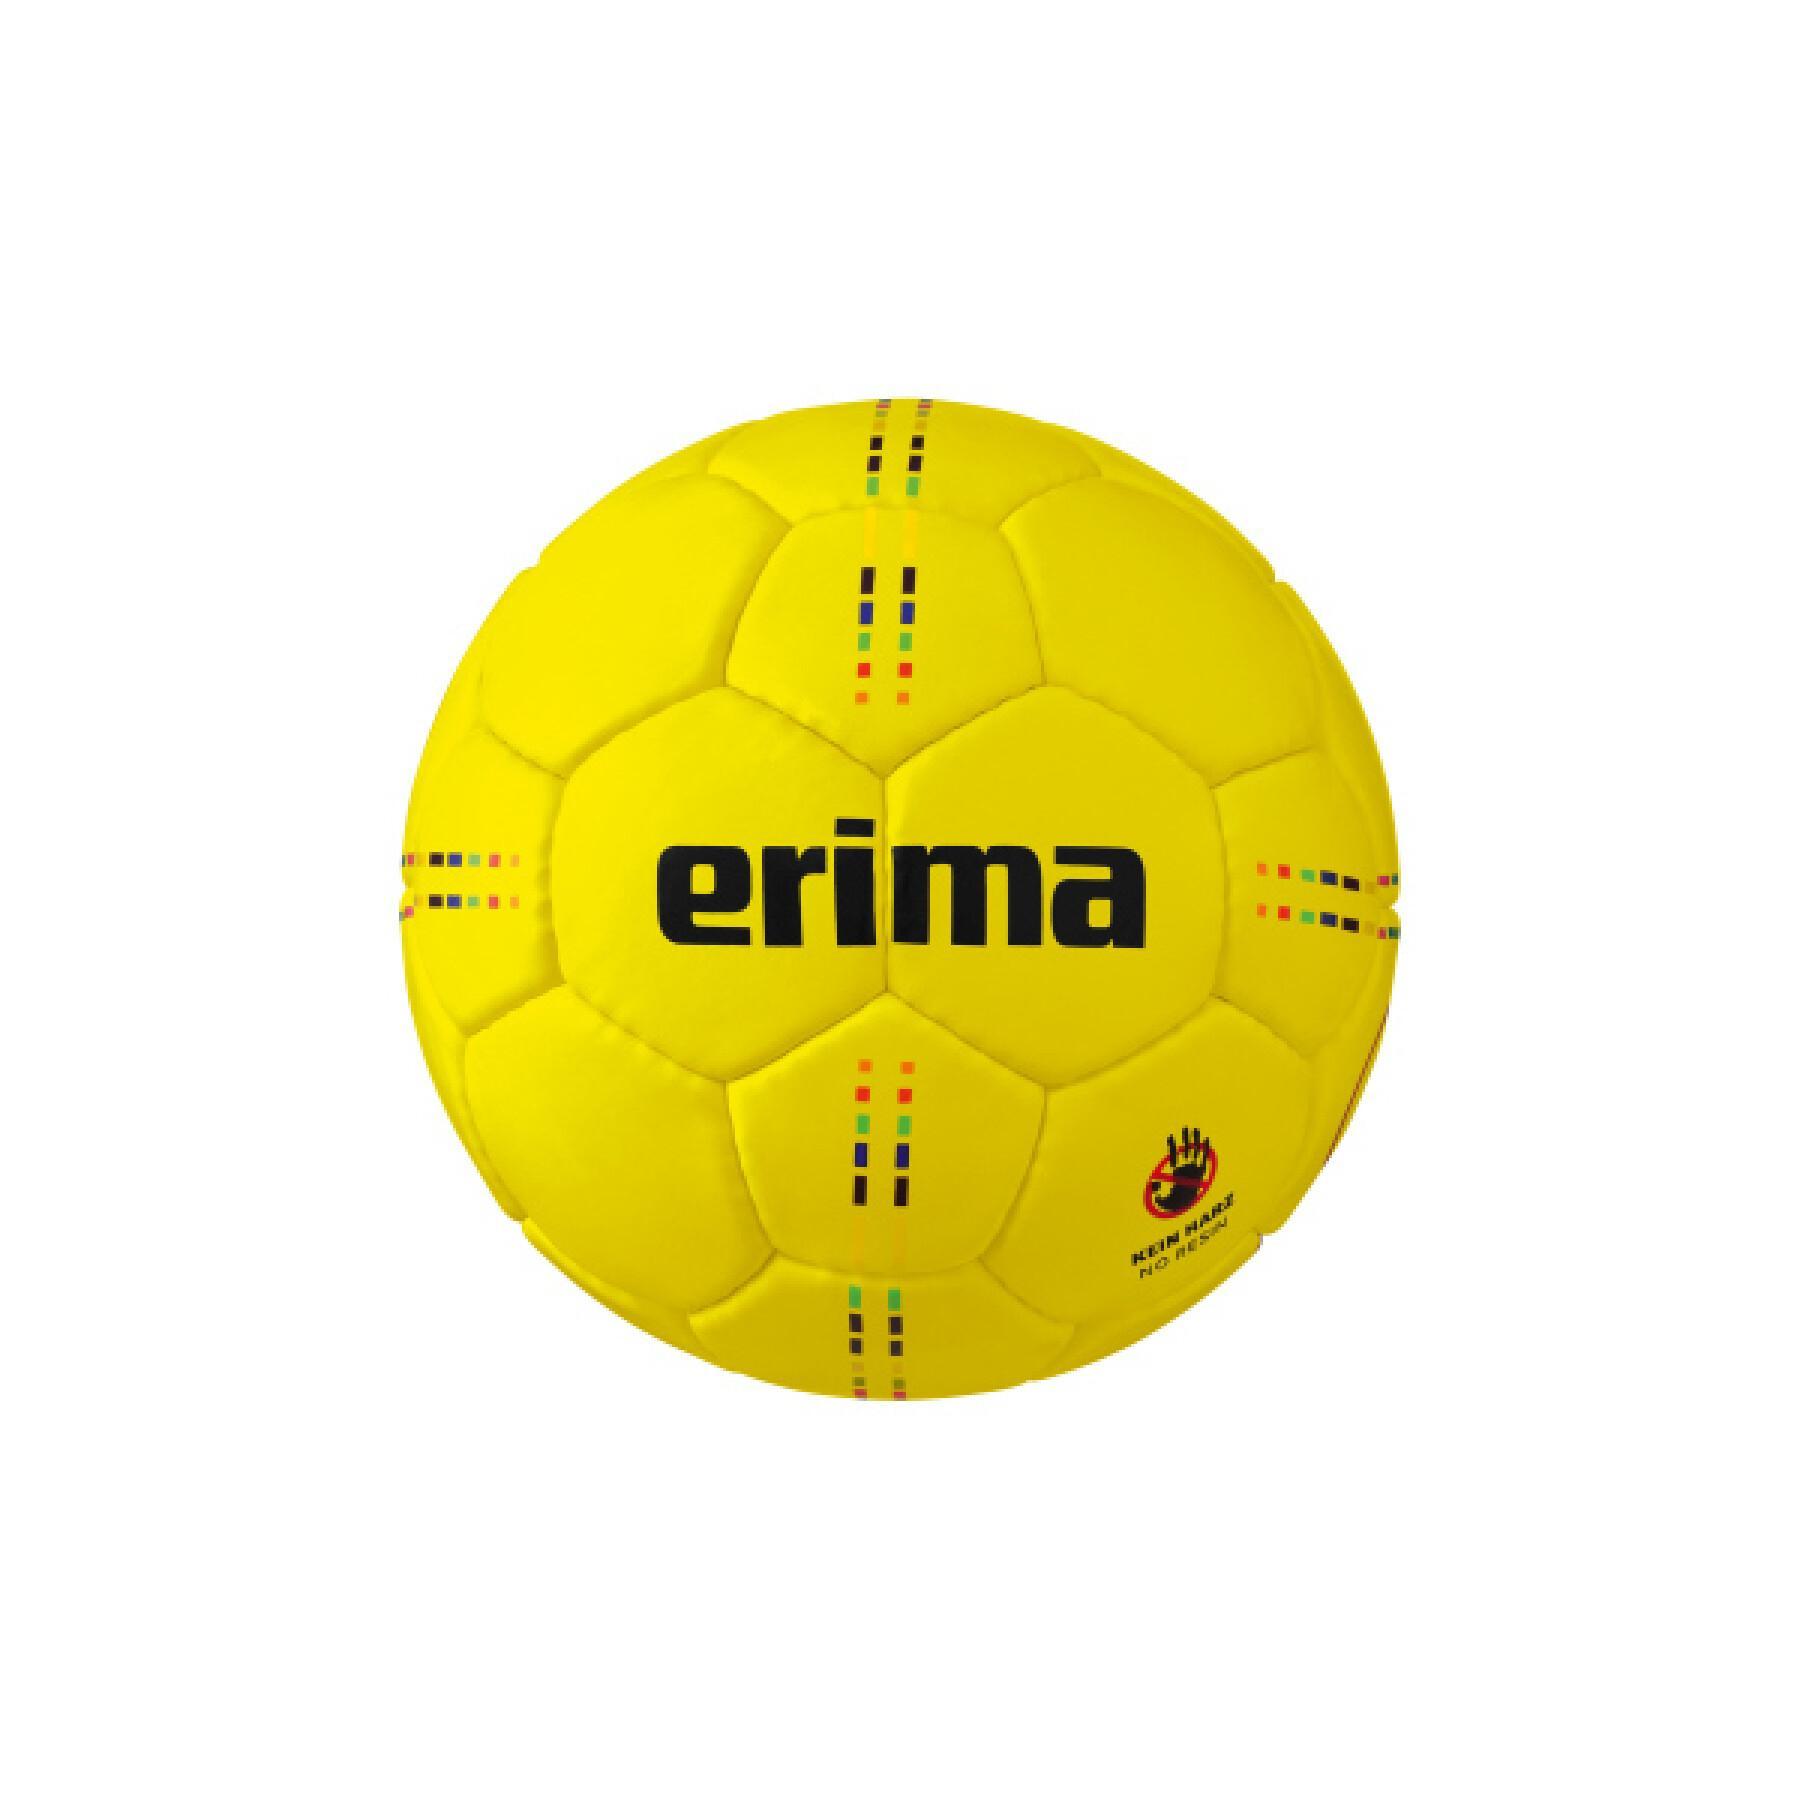 Erima - Résine Handball Trimona